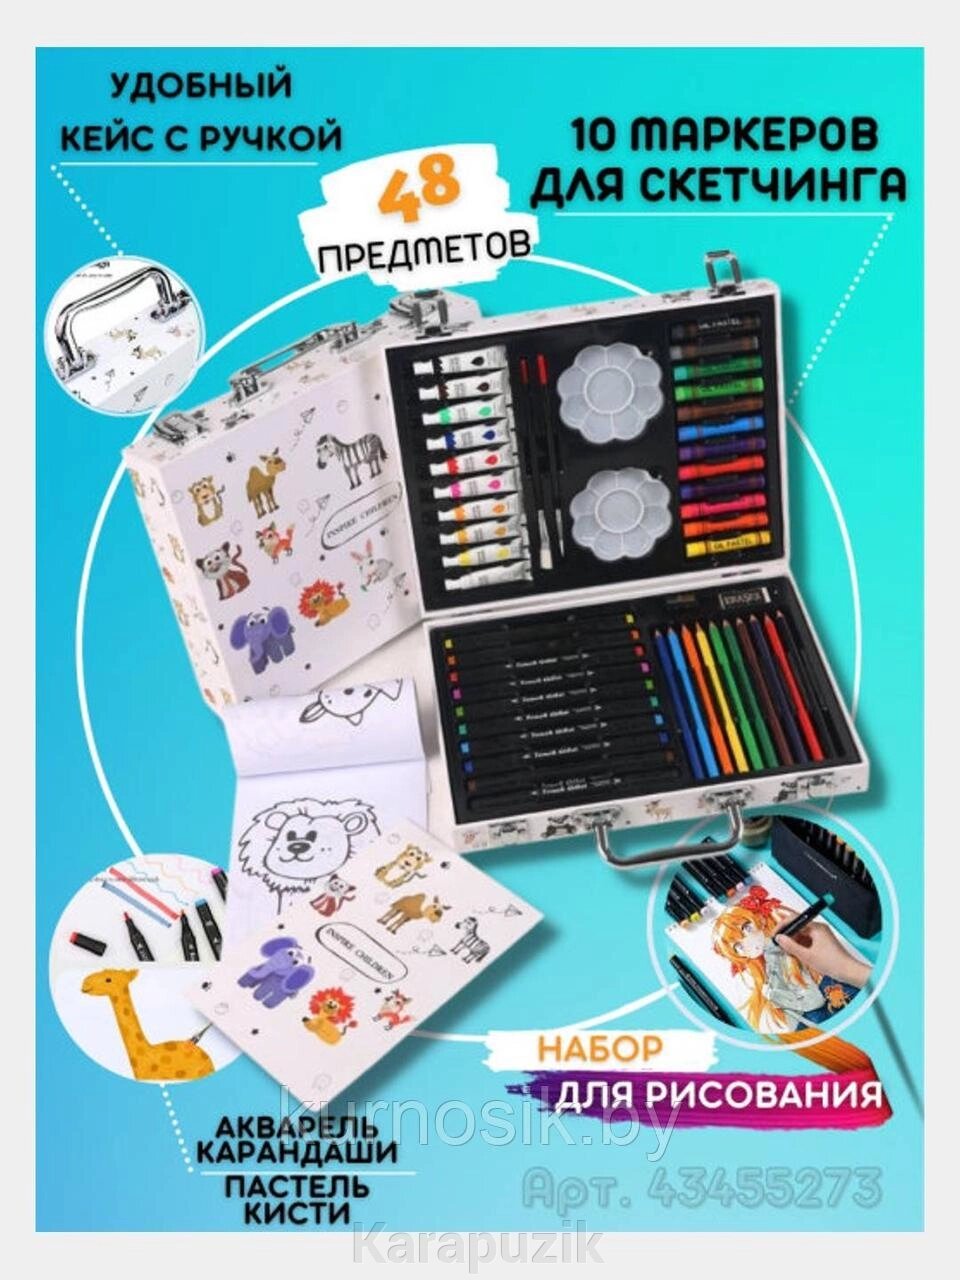 Набор для рисования "Набор художника" 50 предметов, набор юного художника в чемодане с маркерами от компании Karapuzik - фото 1